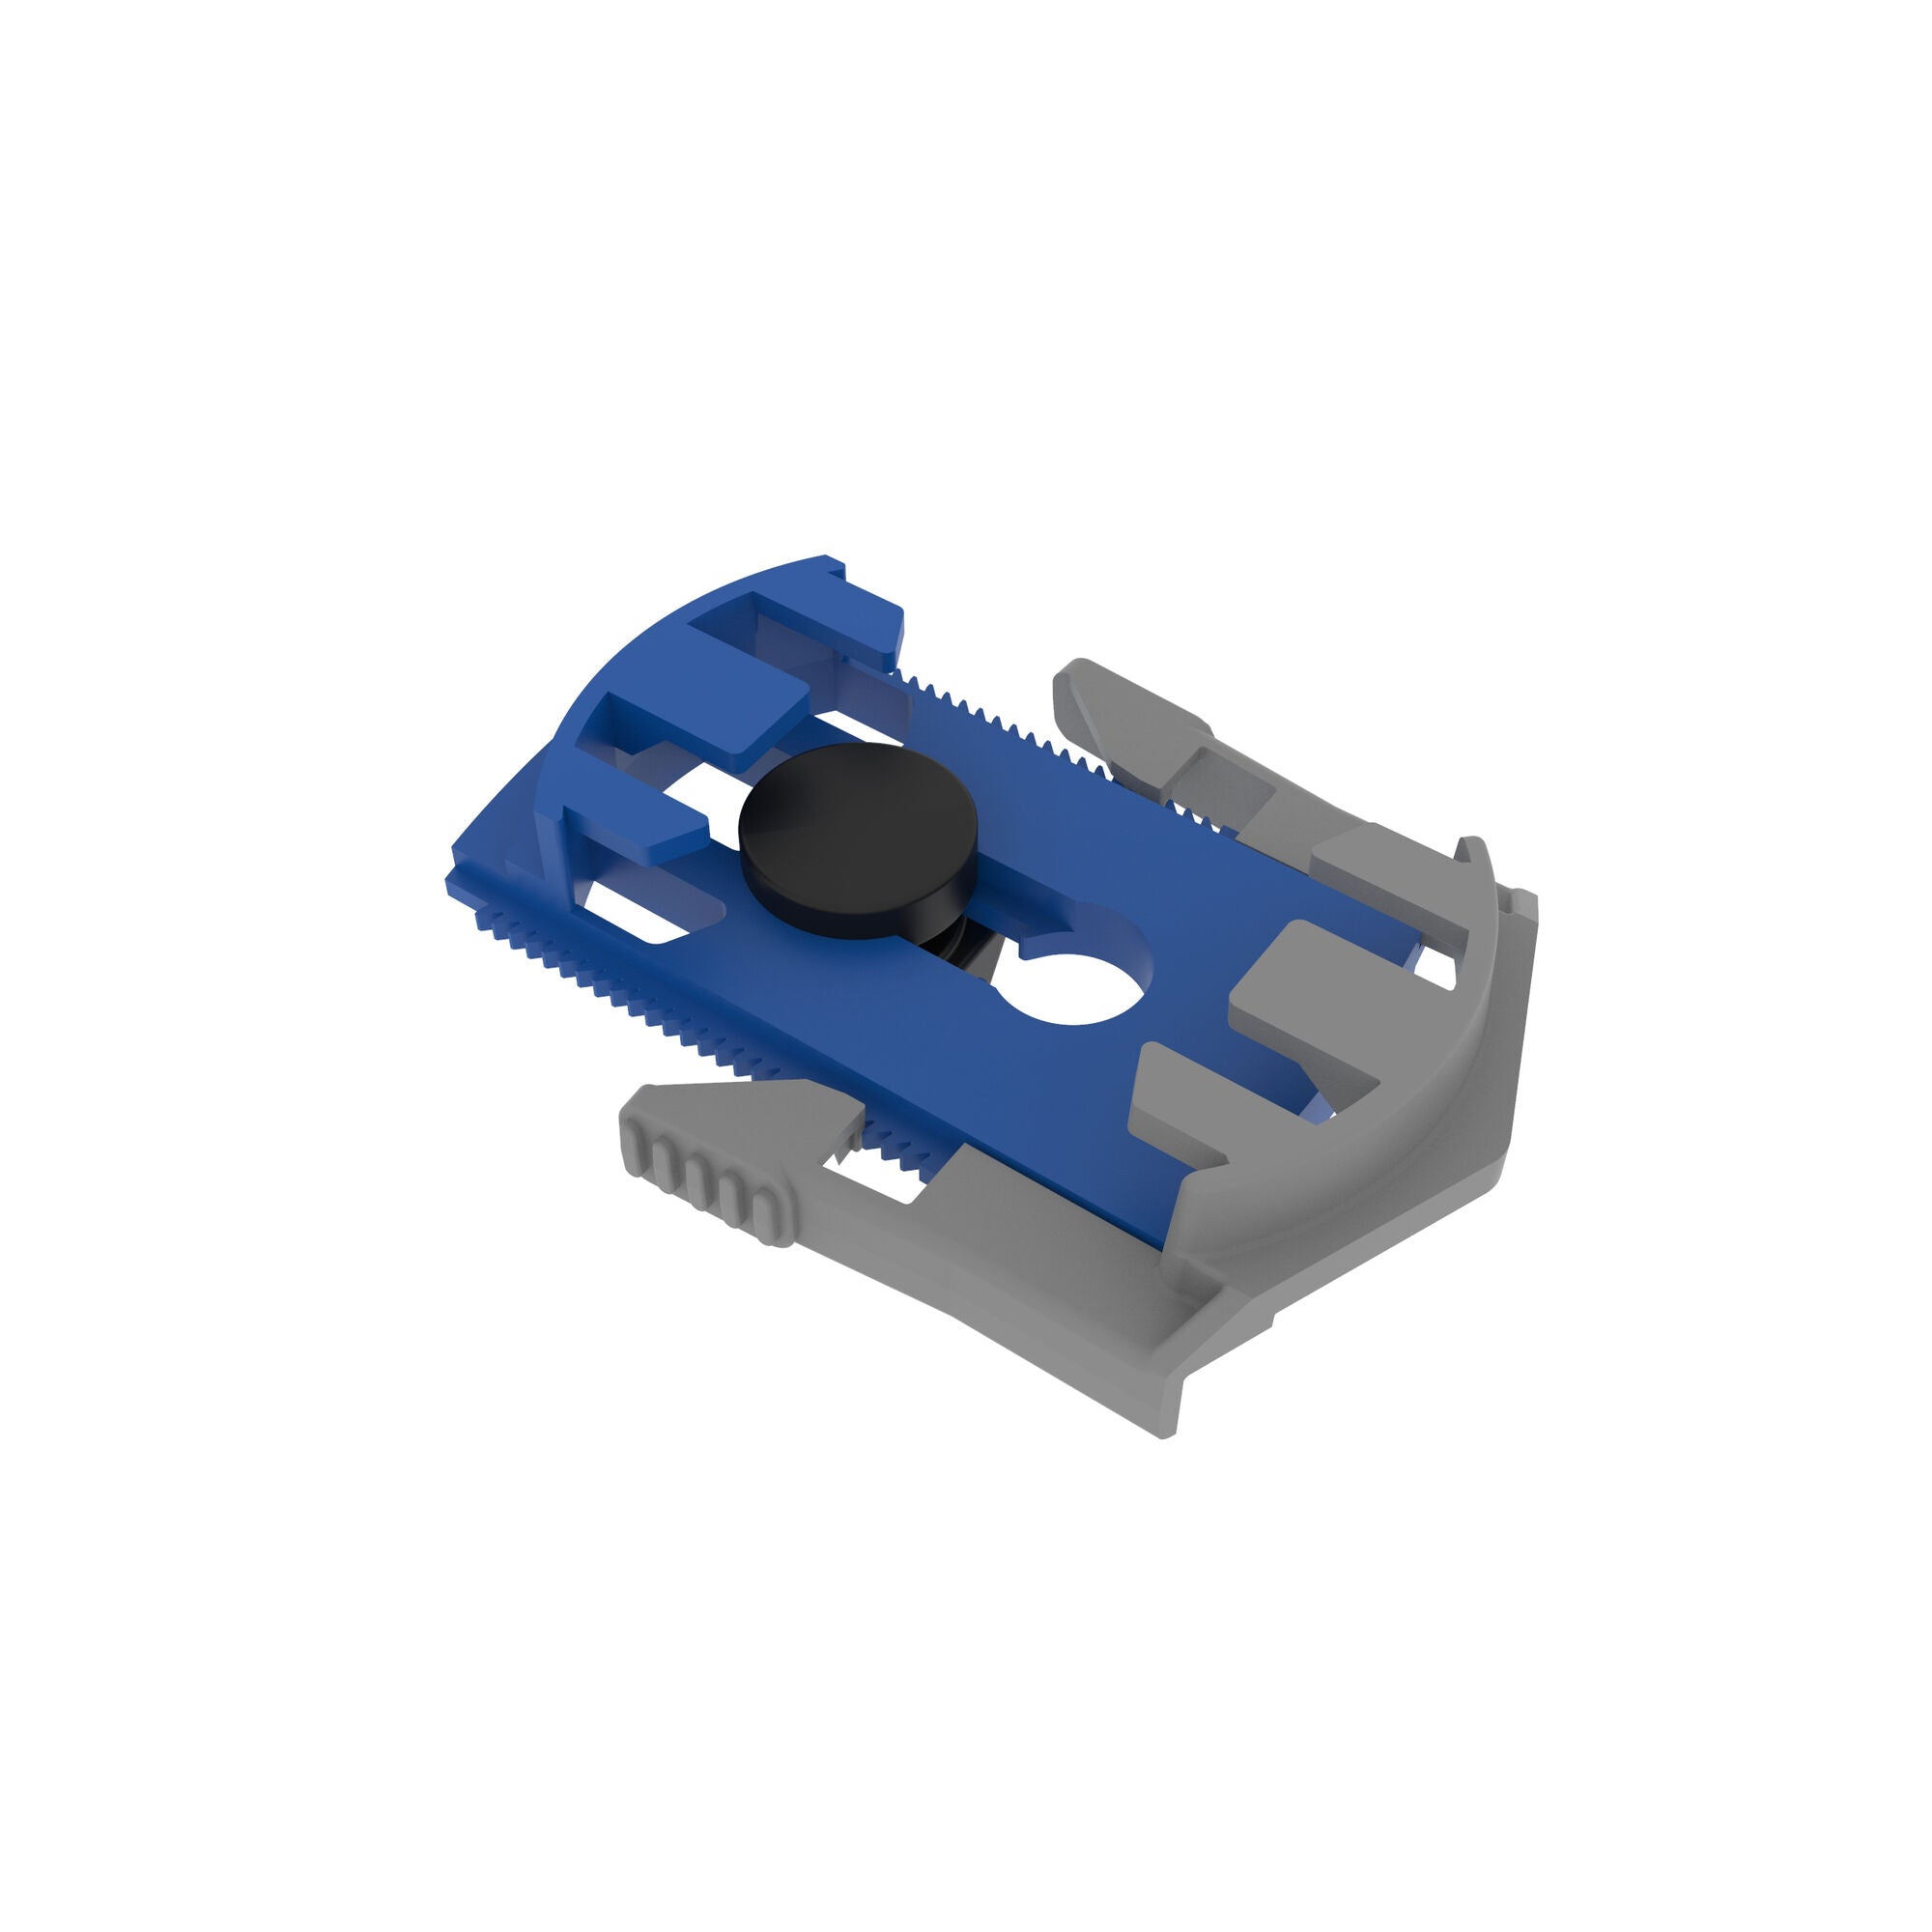 Kreg KPHA150- Pocket-Hole Jig Universal Clamp Adapter